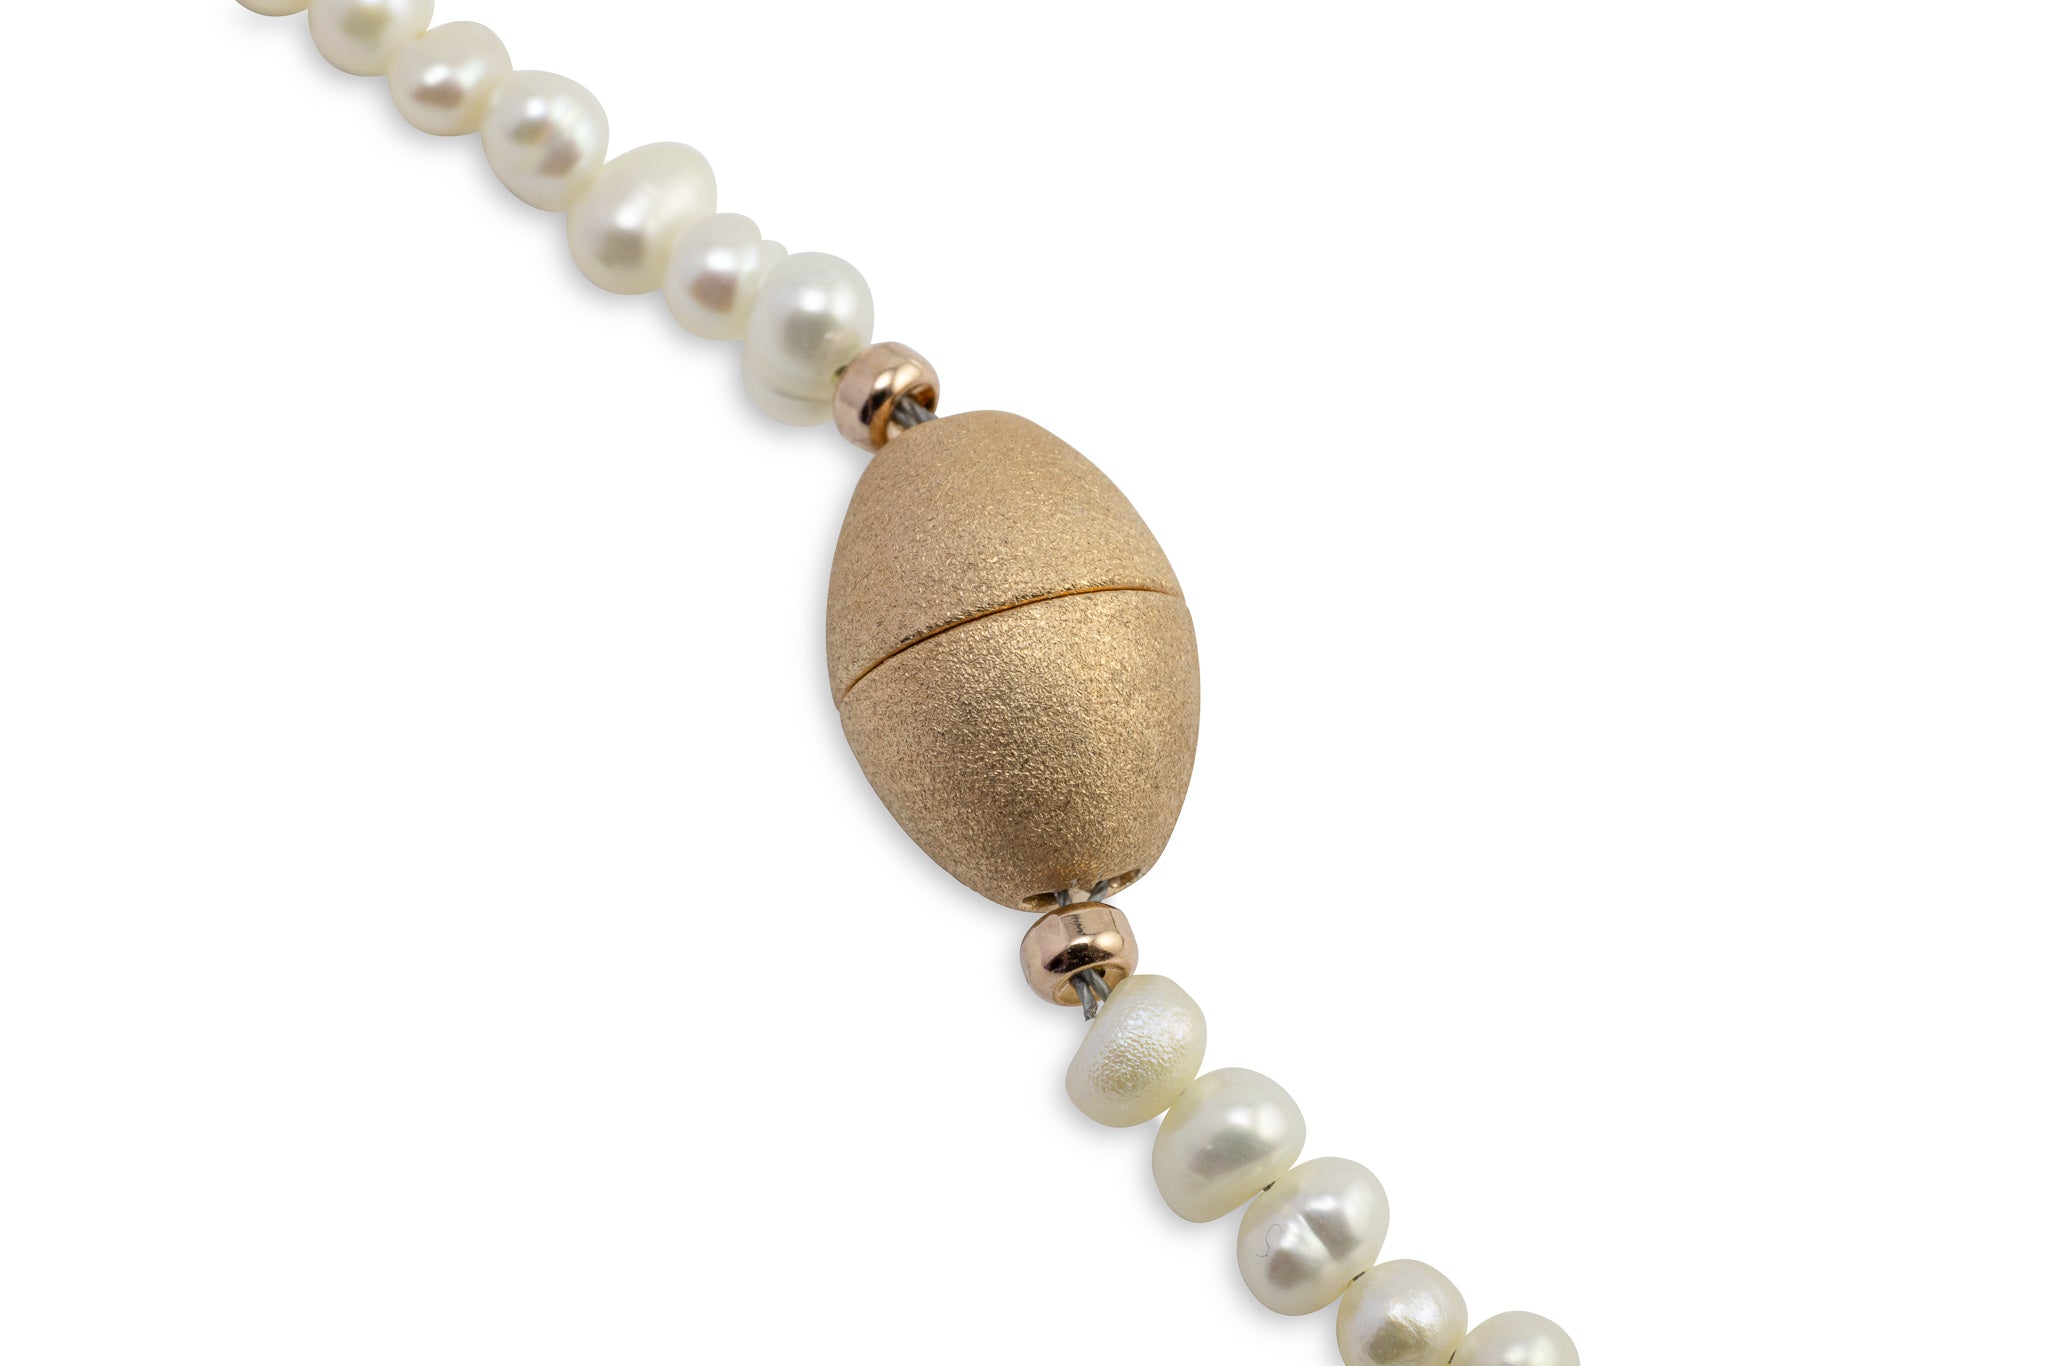 Vergoldeter ovaler Magnetverschluss, Nahaufnahme mit Perlenkette sichtbar.